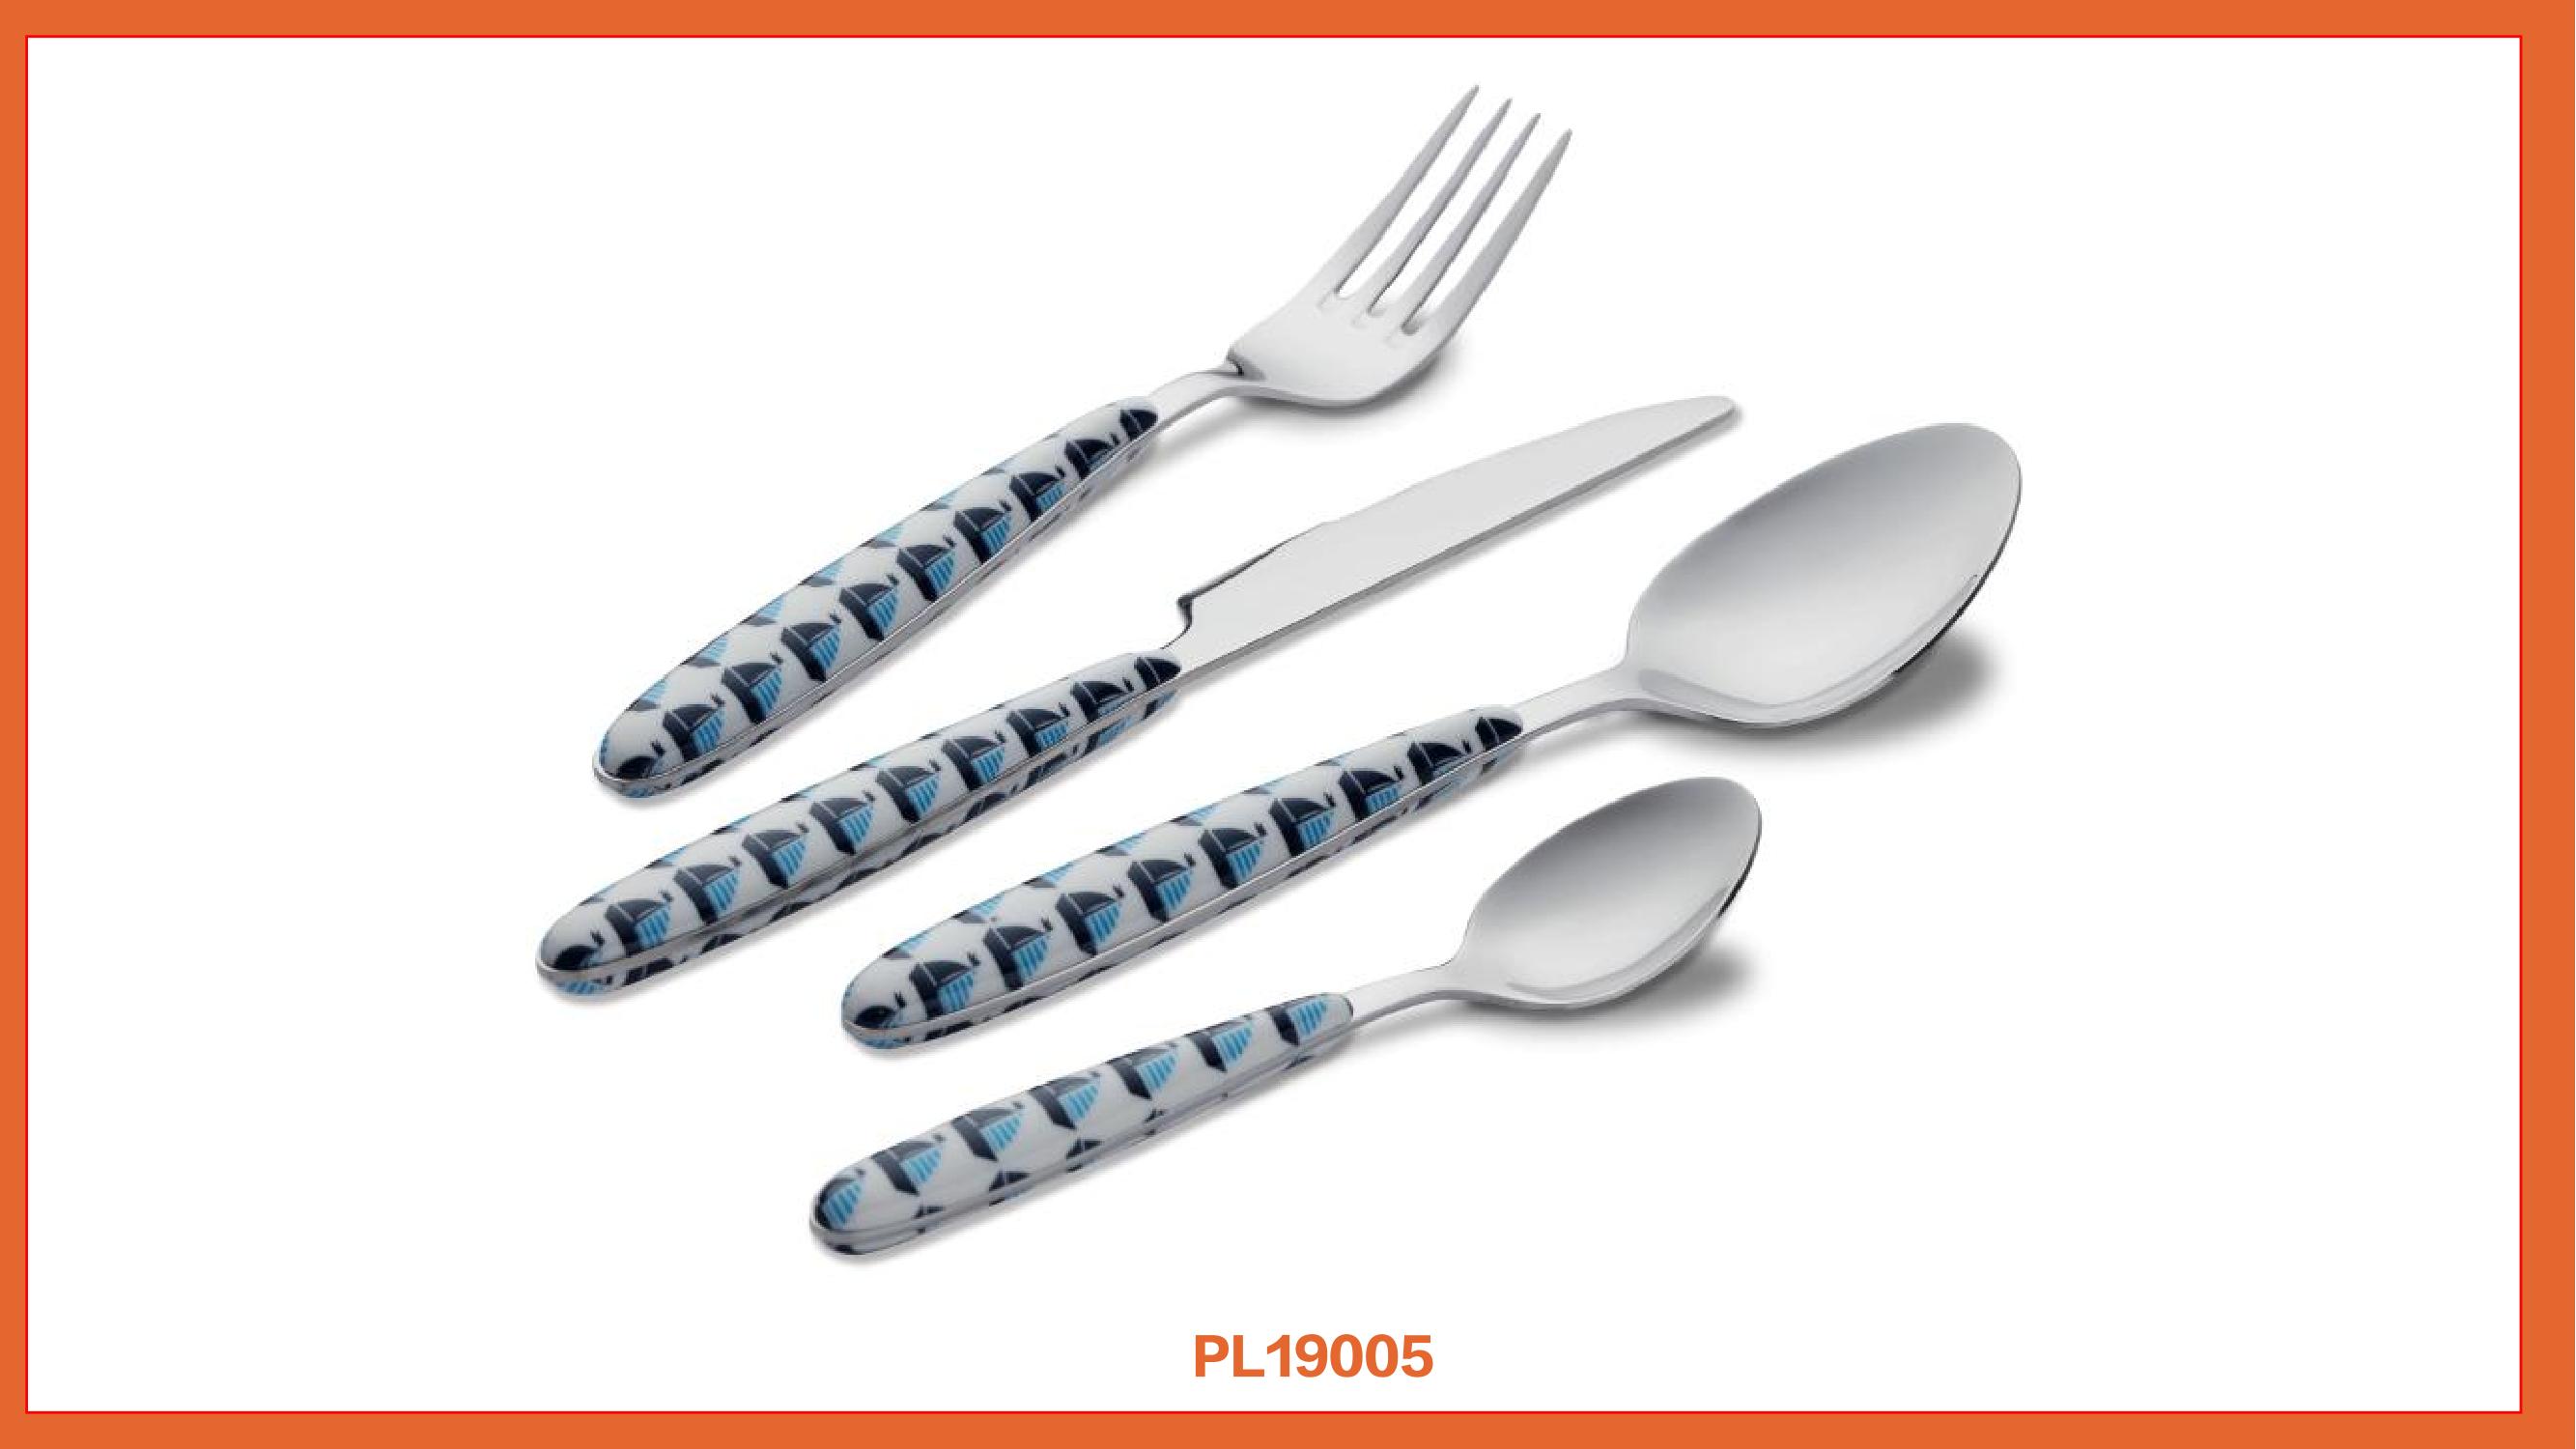 catalogue of plastic handle cutlery_18.jpg